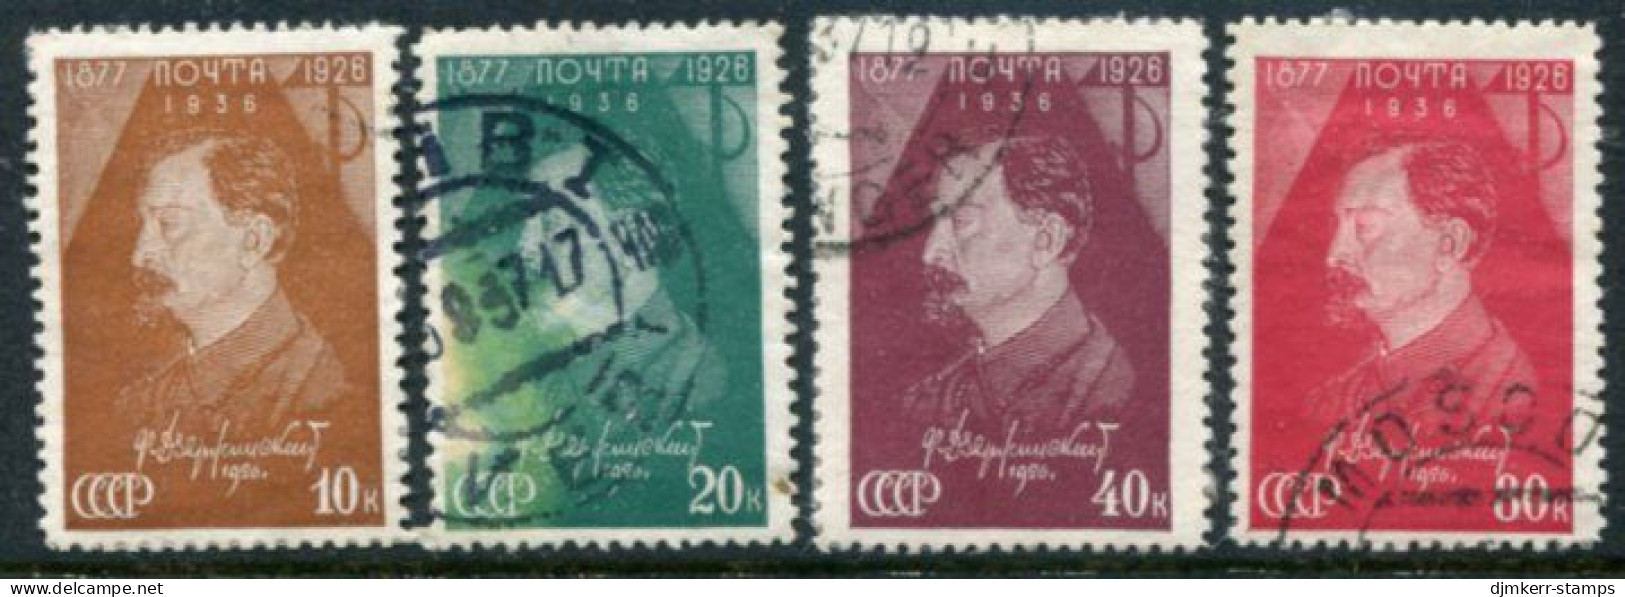 SOVIET UNION 1937 Dzerzhinsky Death Anniversary Used.  Michel 566-69 - Used Stamps